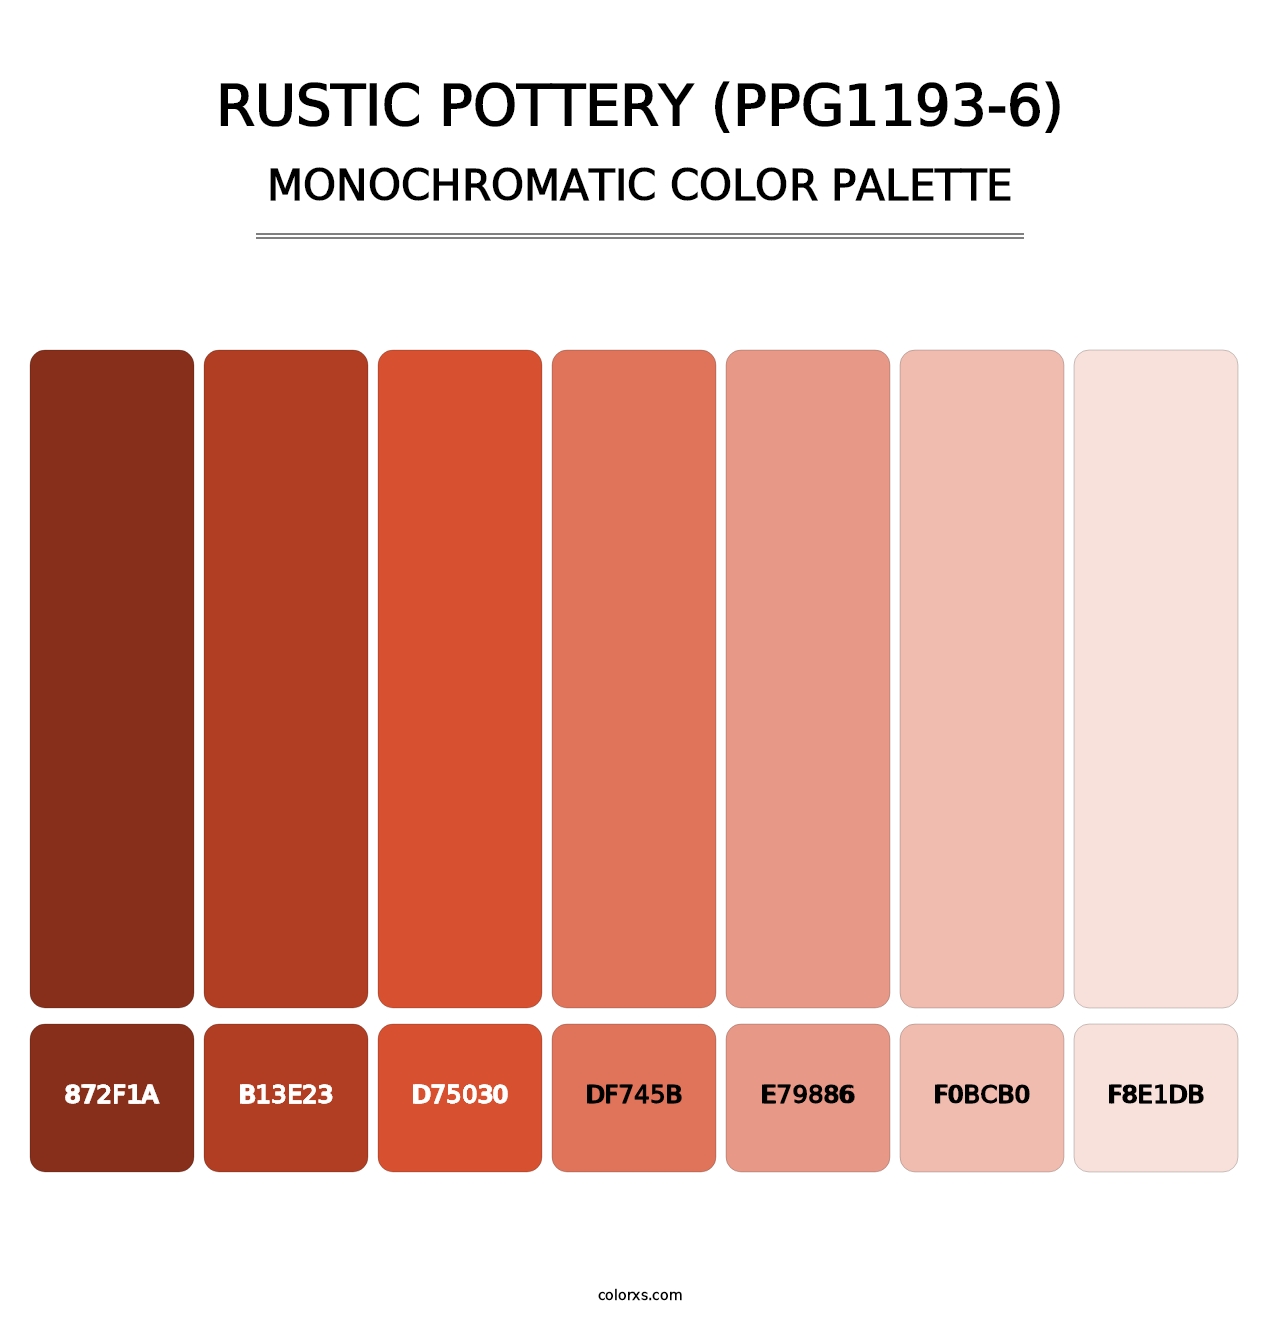 Rustic Pottery (PPG1193-6) - Monochromatic Color Palette